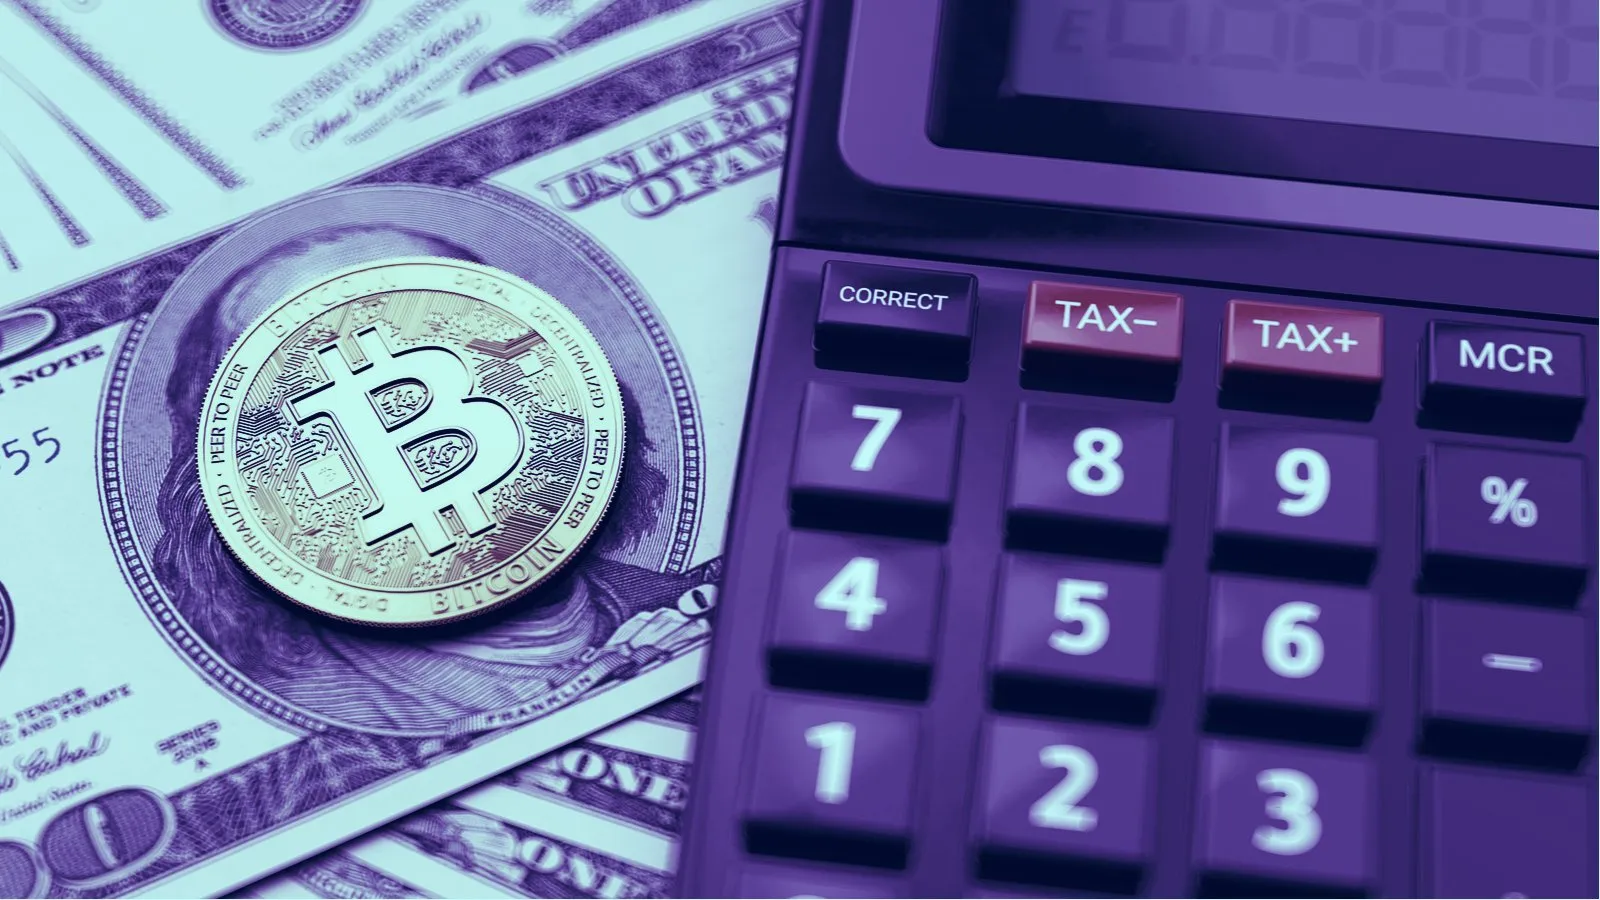 Bitcoin tax ain't so easy. Image: Shutterstock